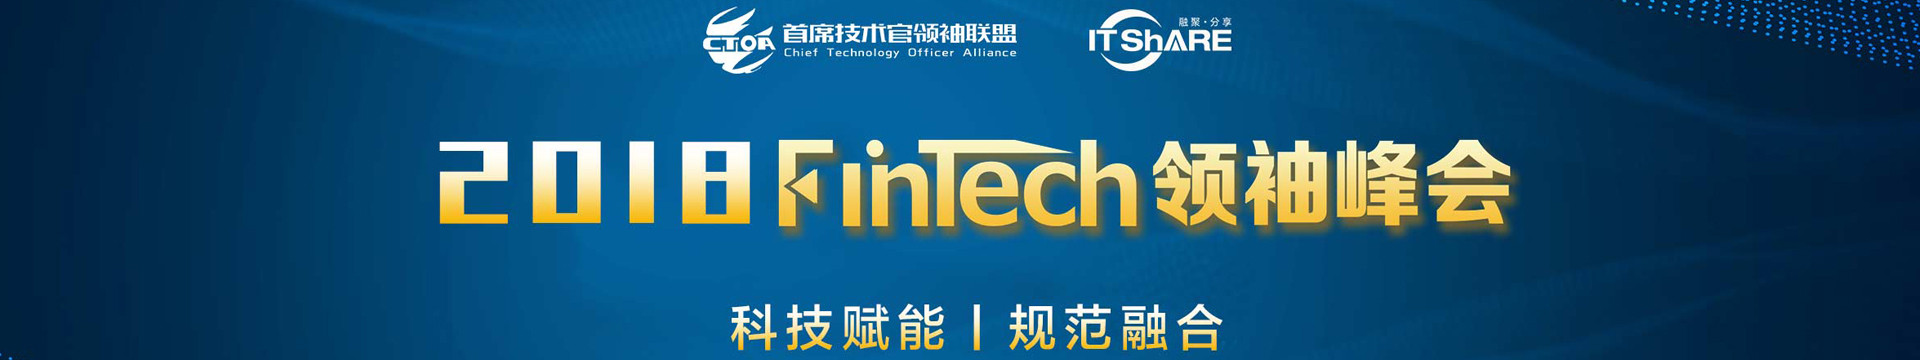 2018FinTech领袖峰会-科技赋能与规范融合